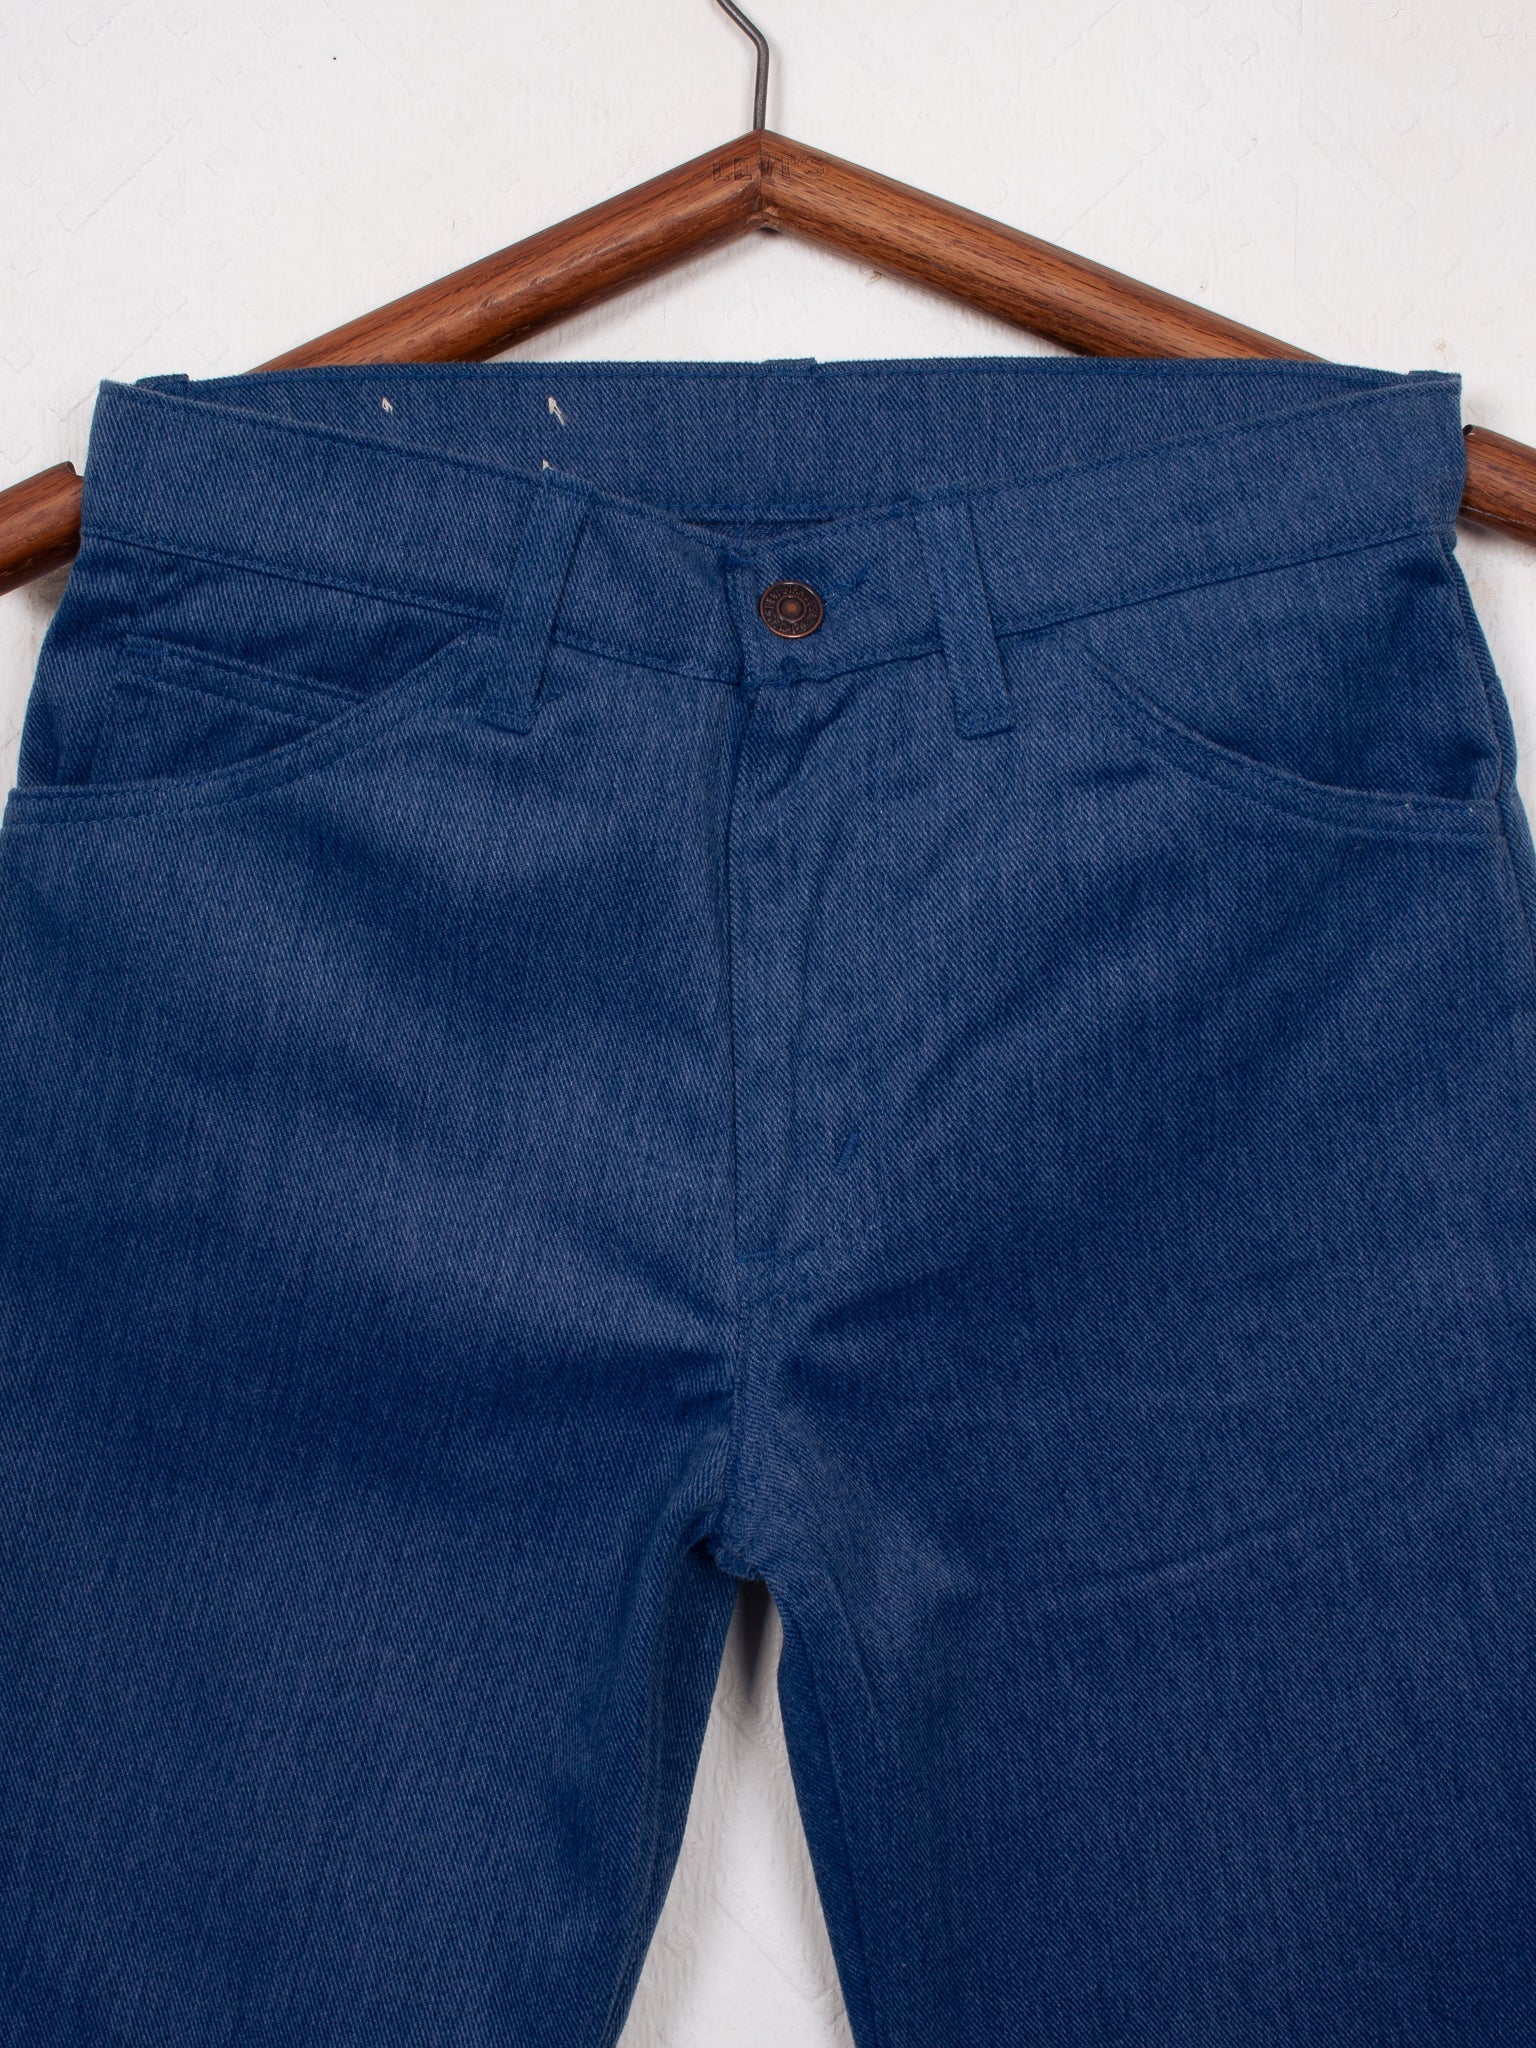 pants & trousers 80s Levi's 617 Soft Brush Straights - W28